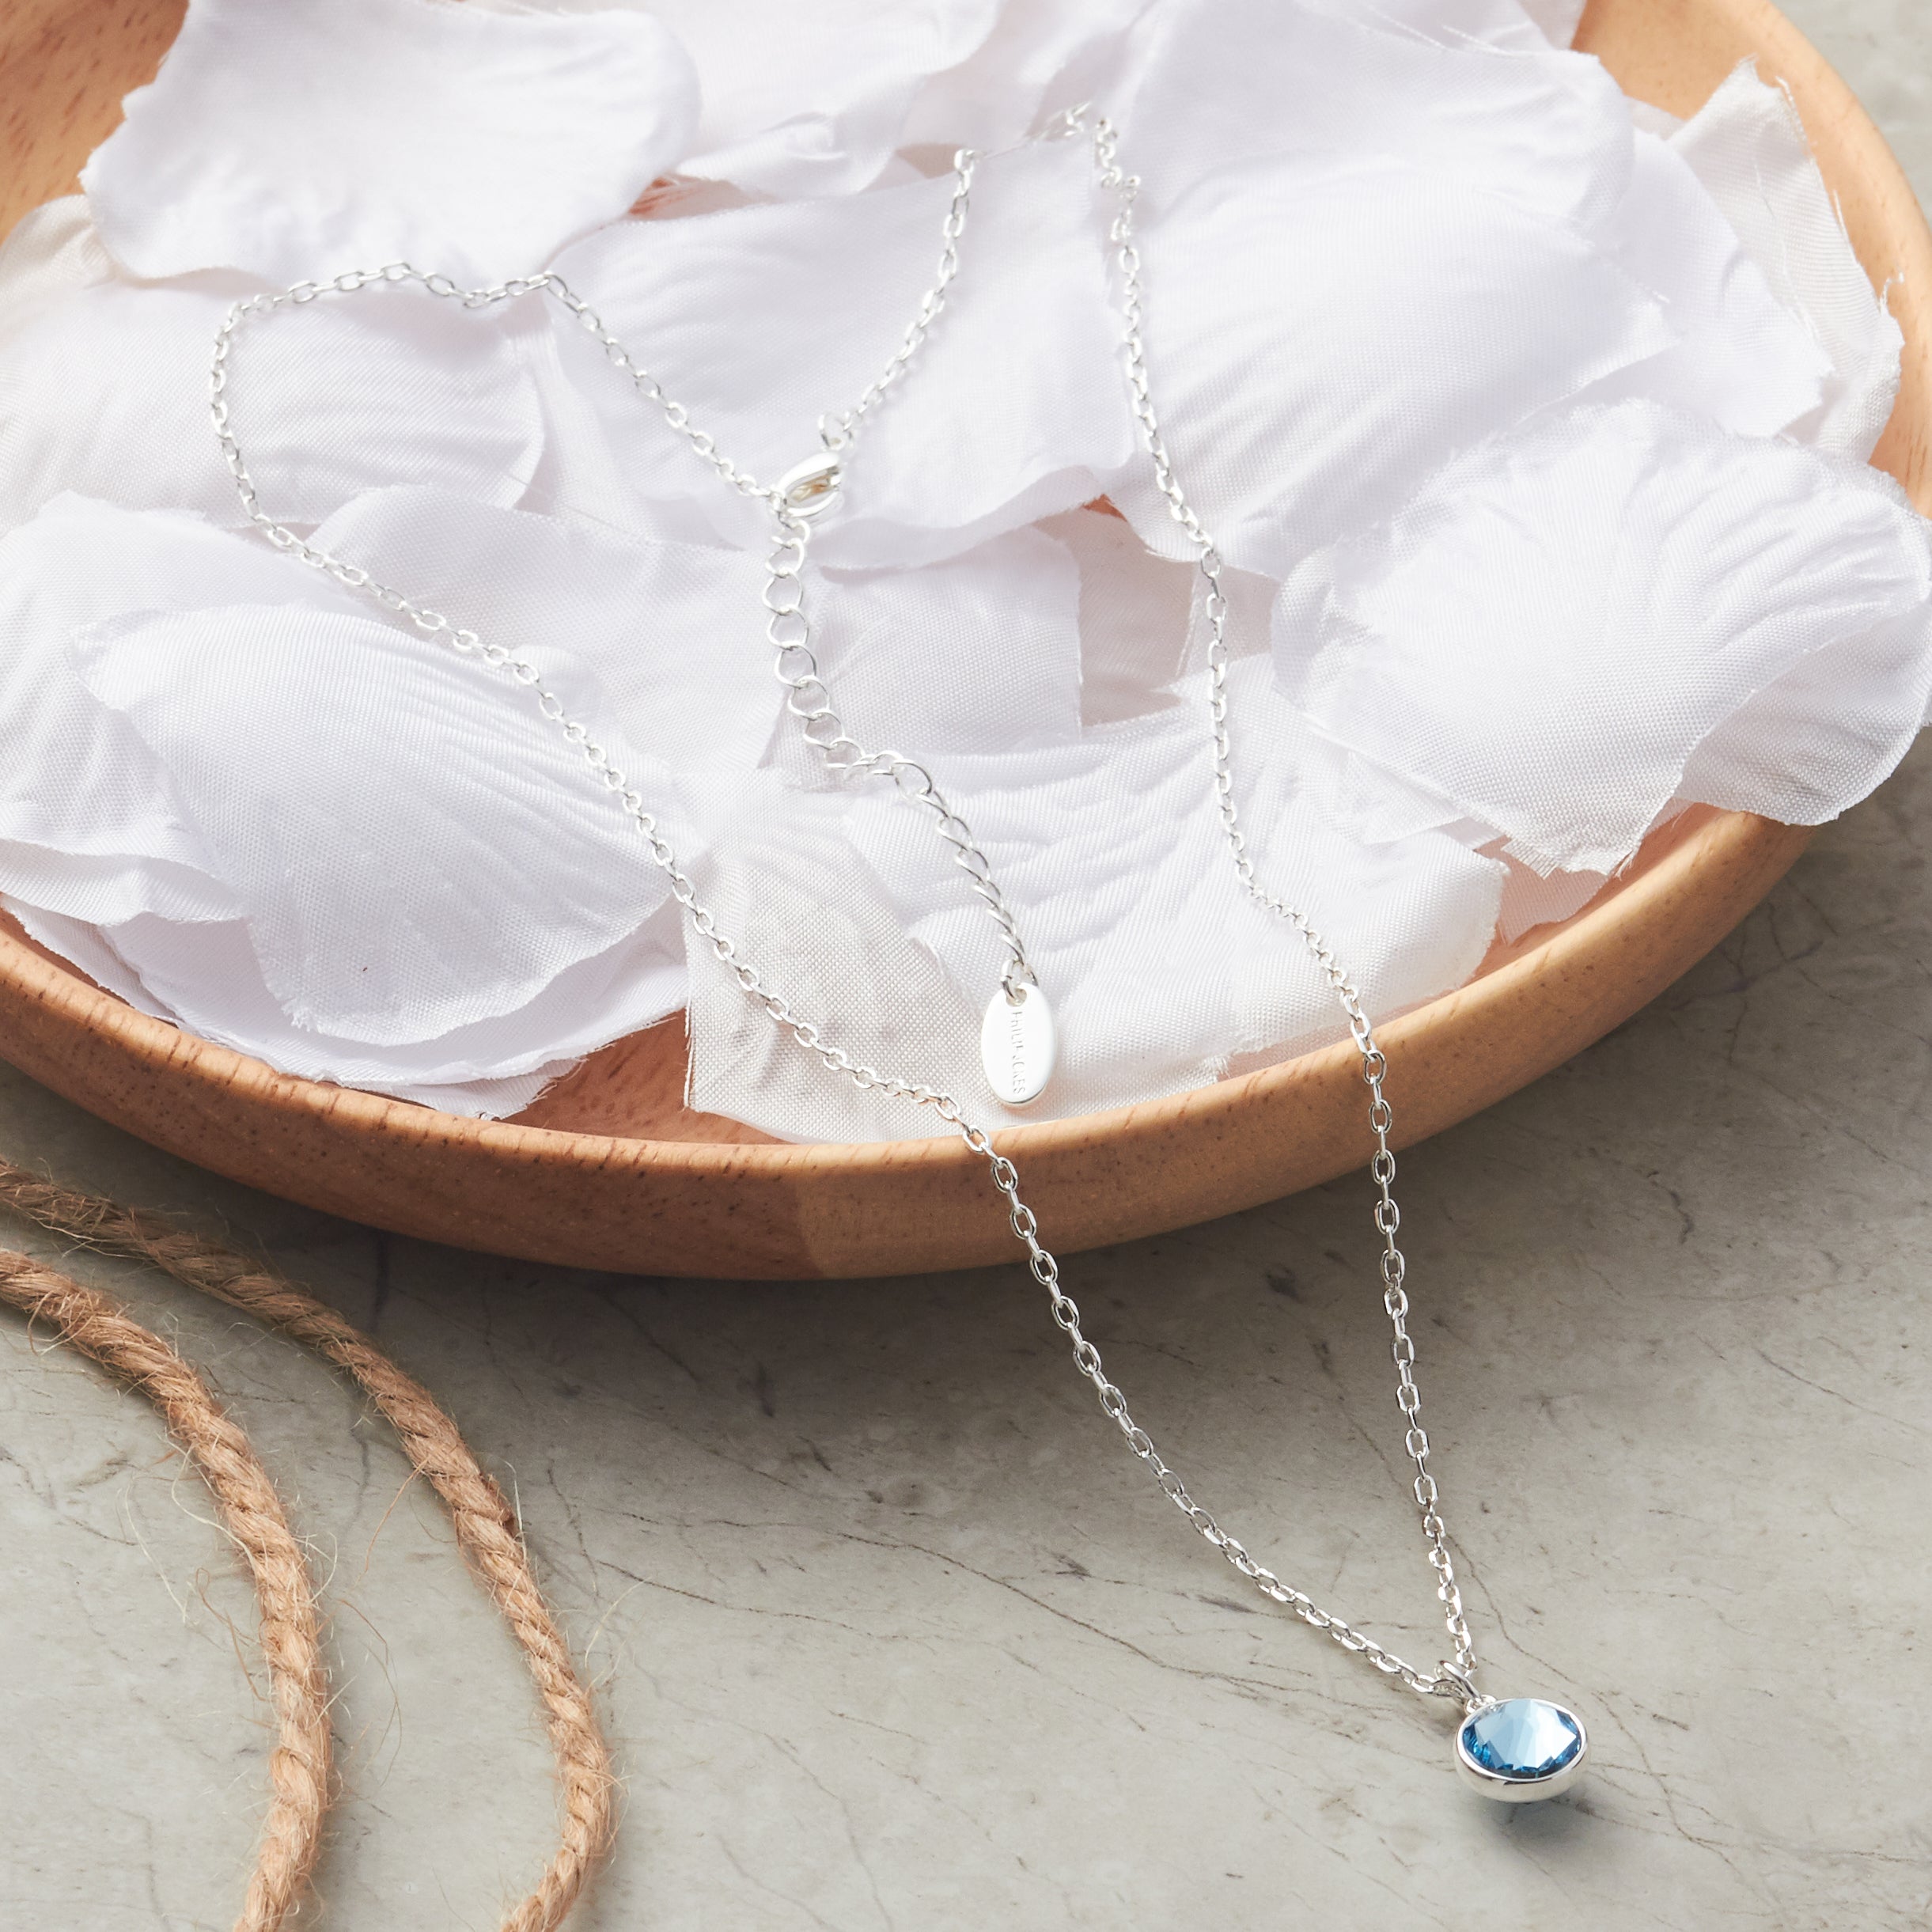 March (Aquamarine) Birthstone Necklace Created with Zircondia® Crystals